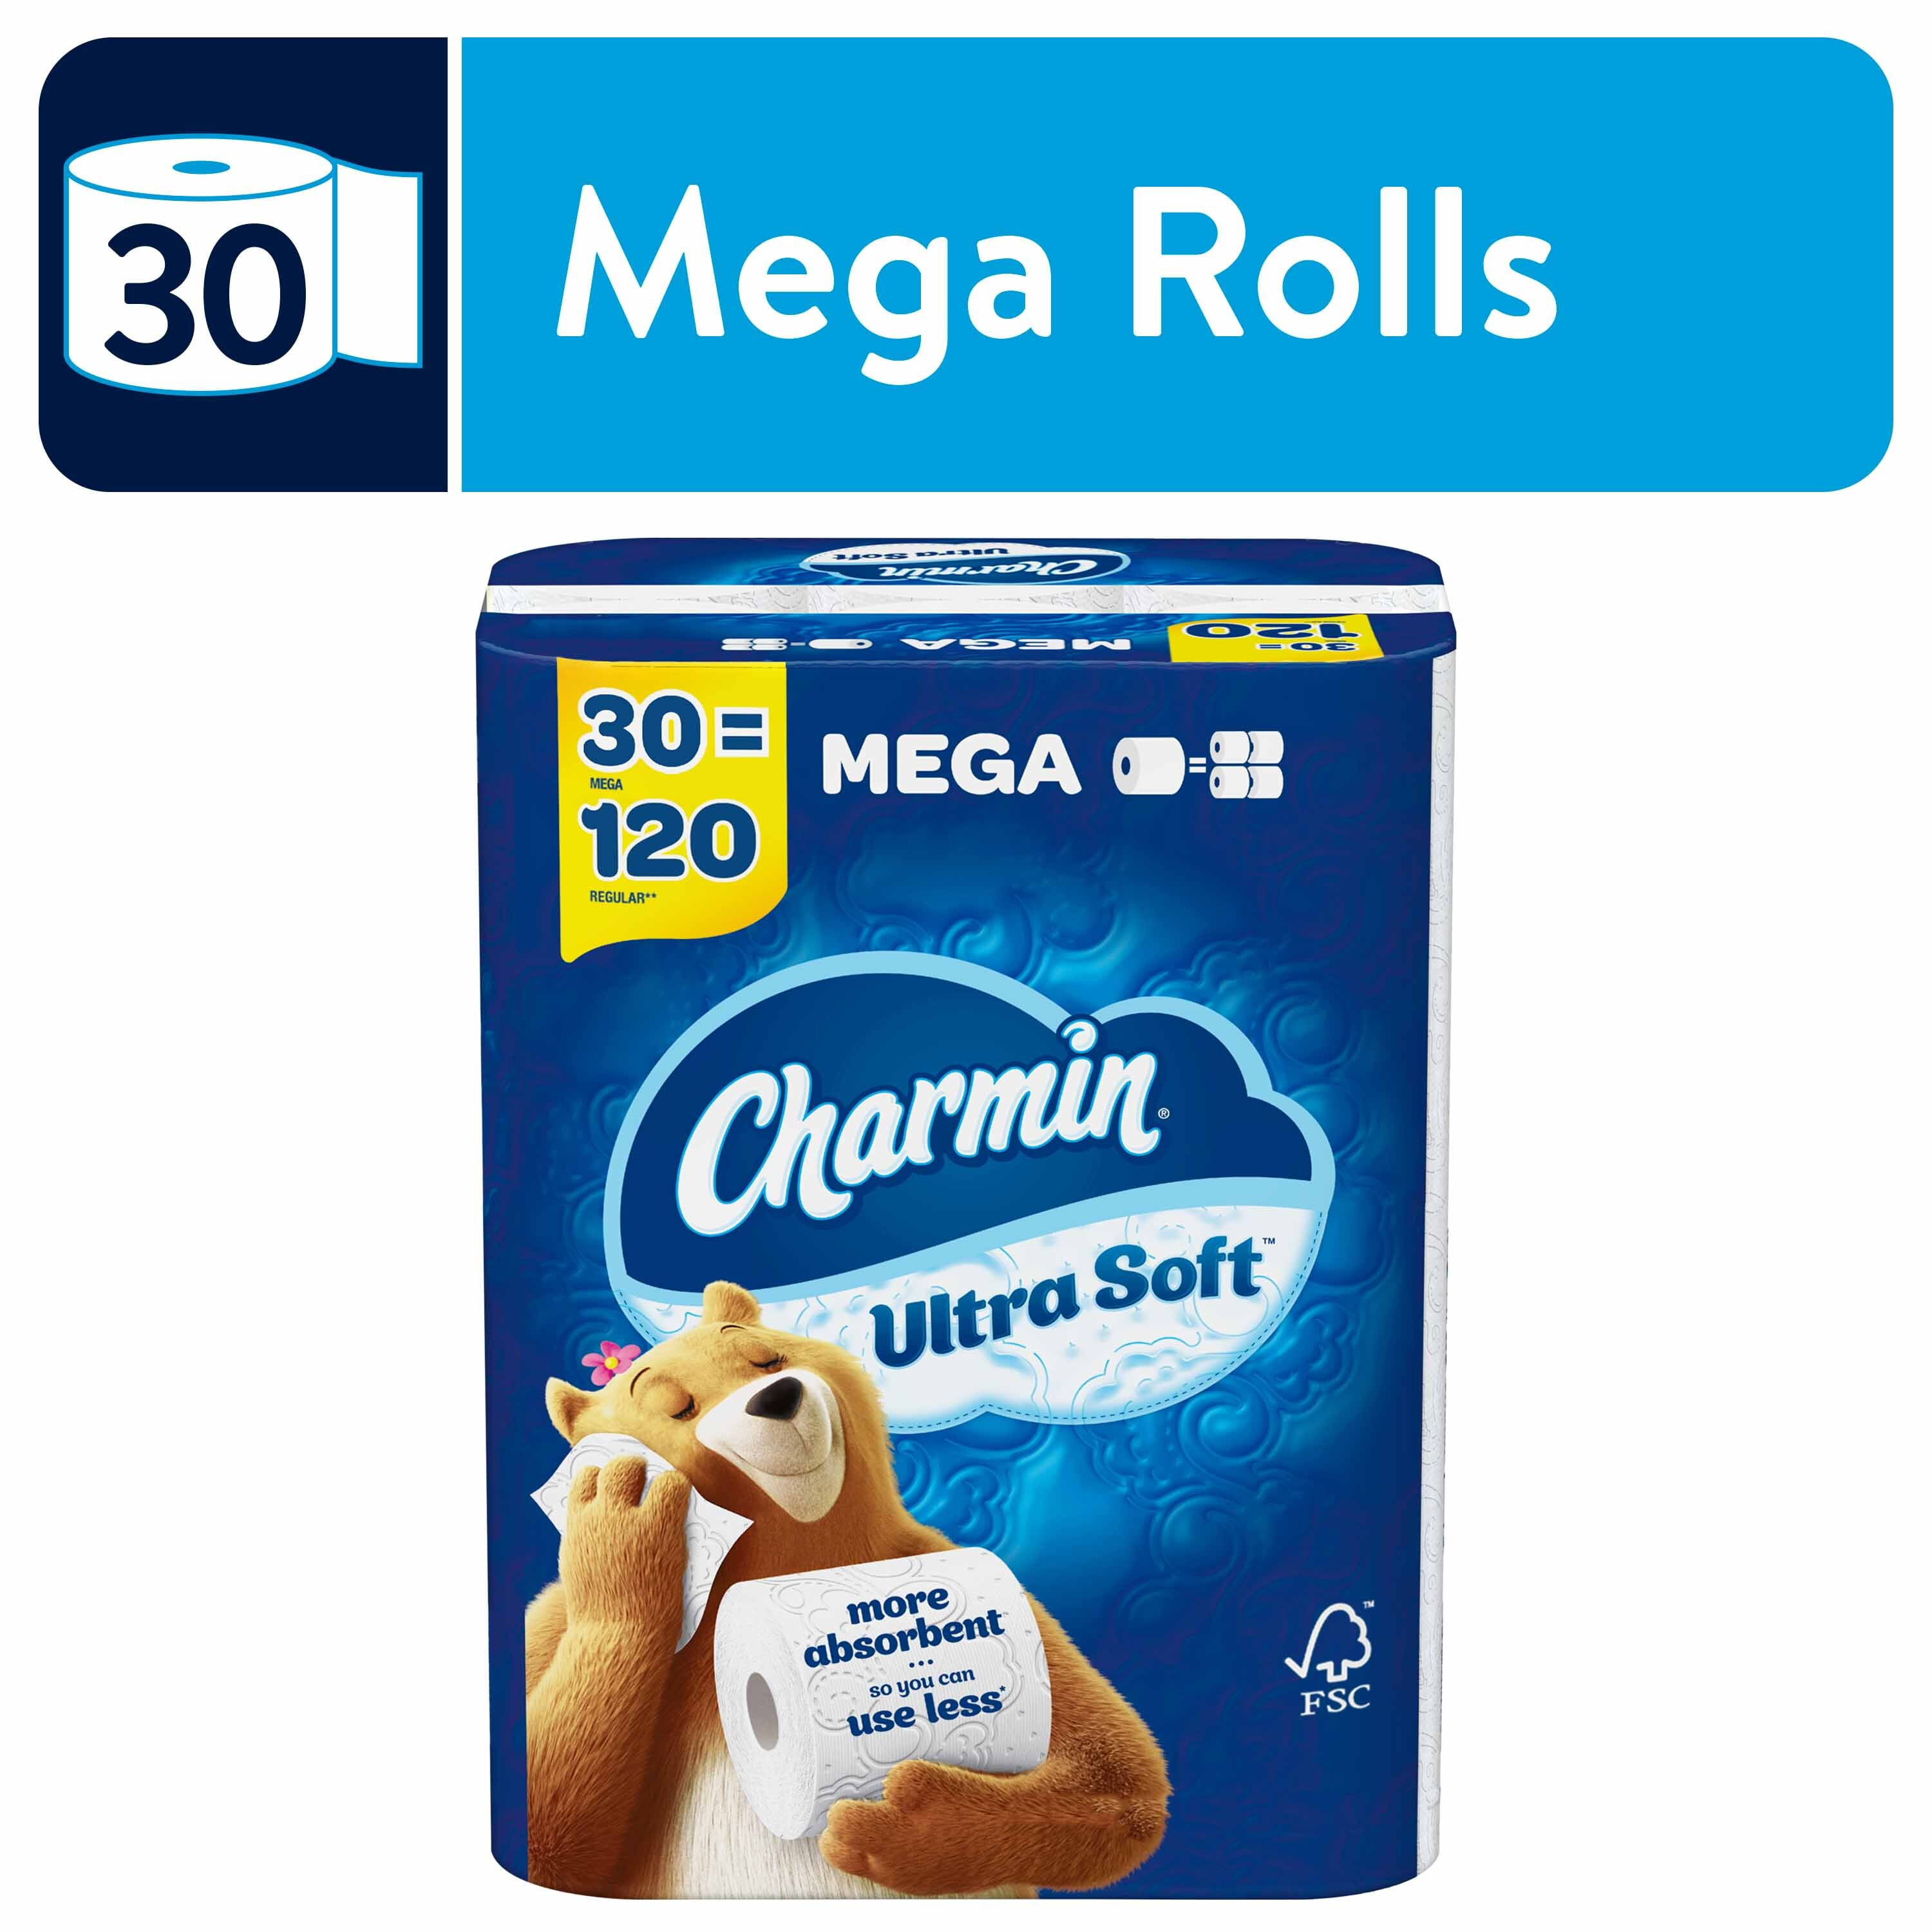 Charmin Ultra Soft Toilet Paper, 30 Mega Roll